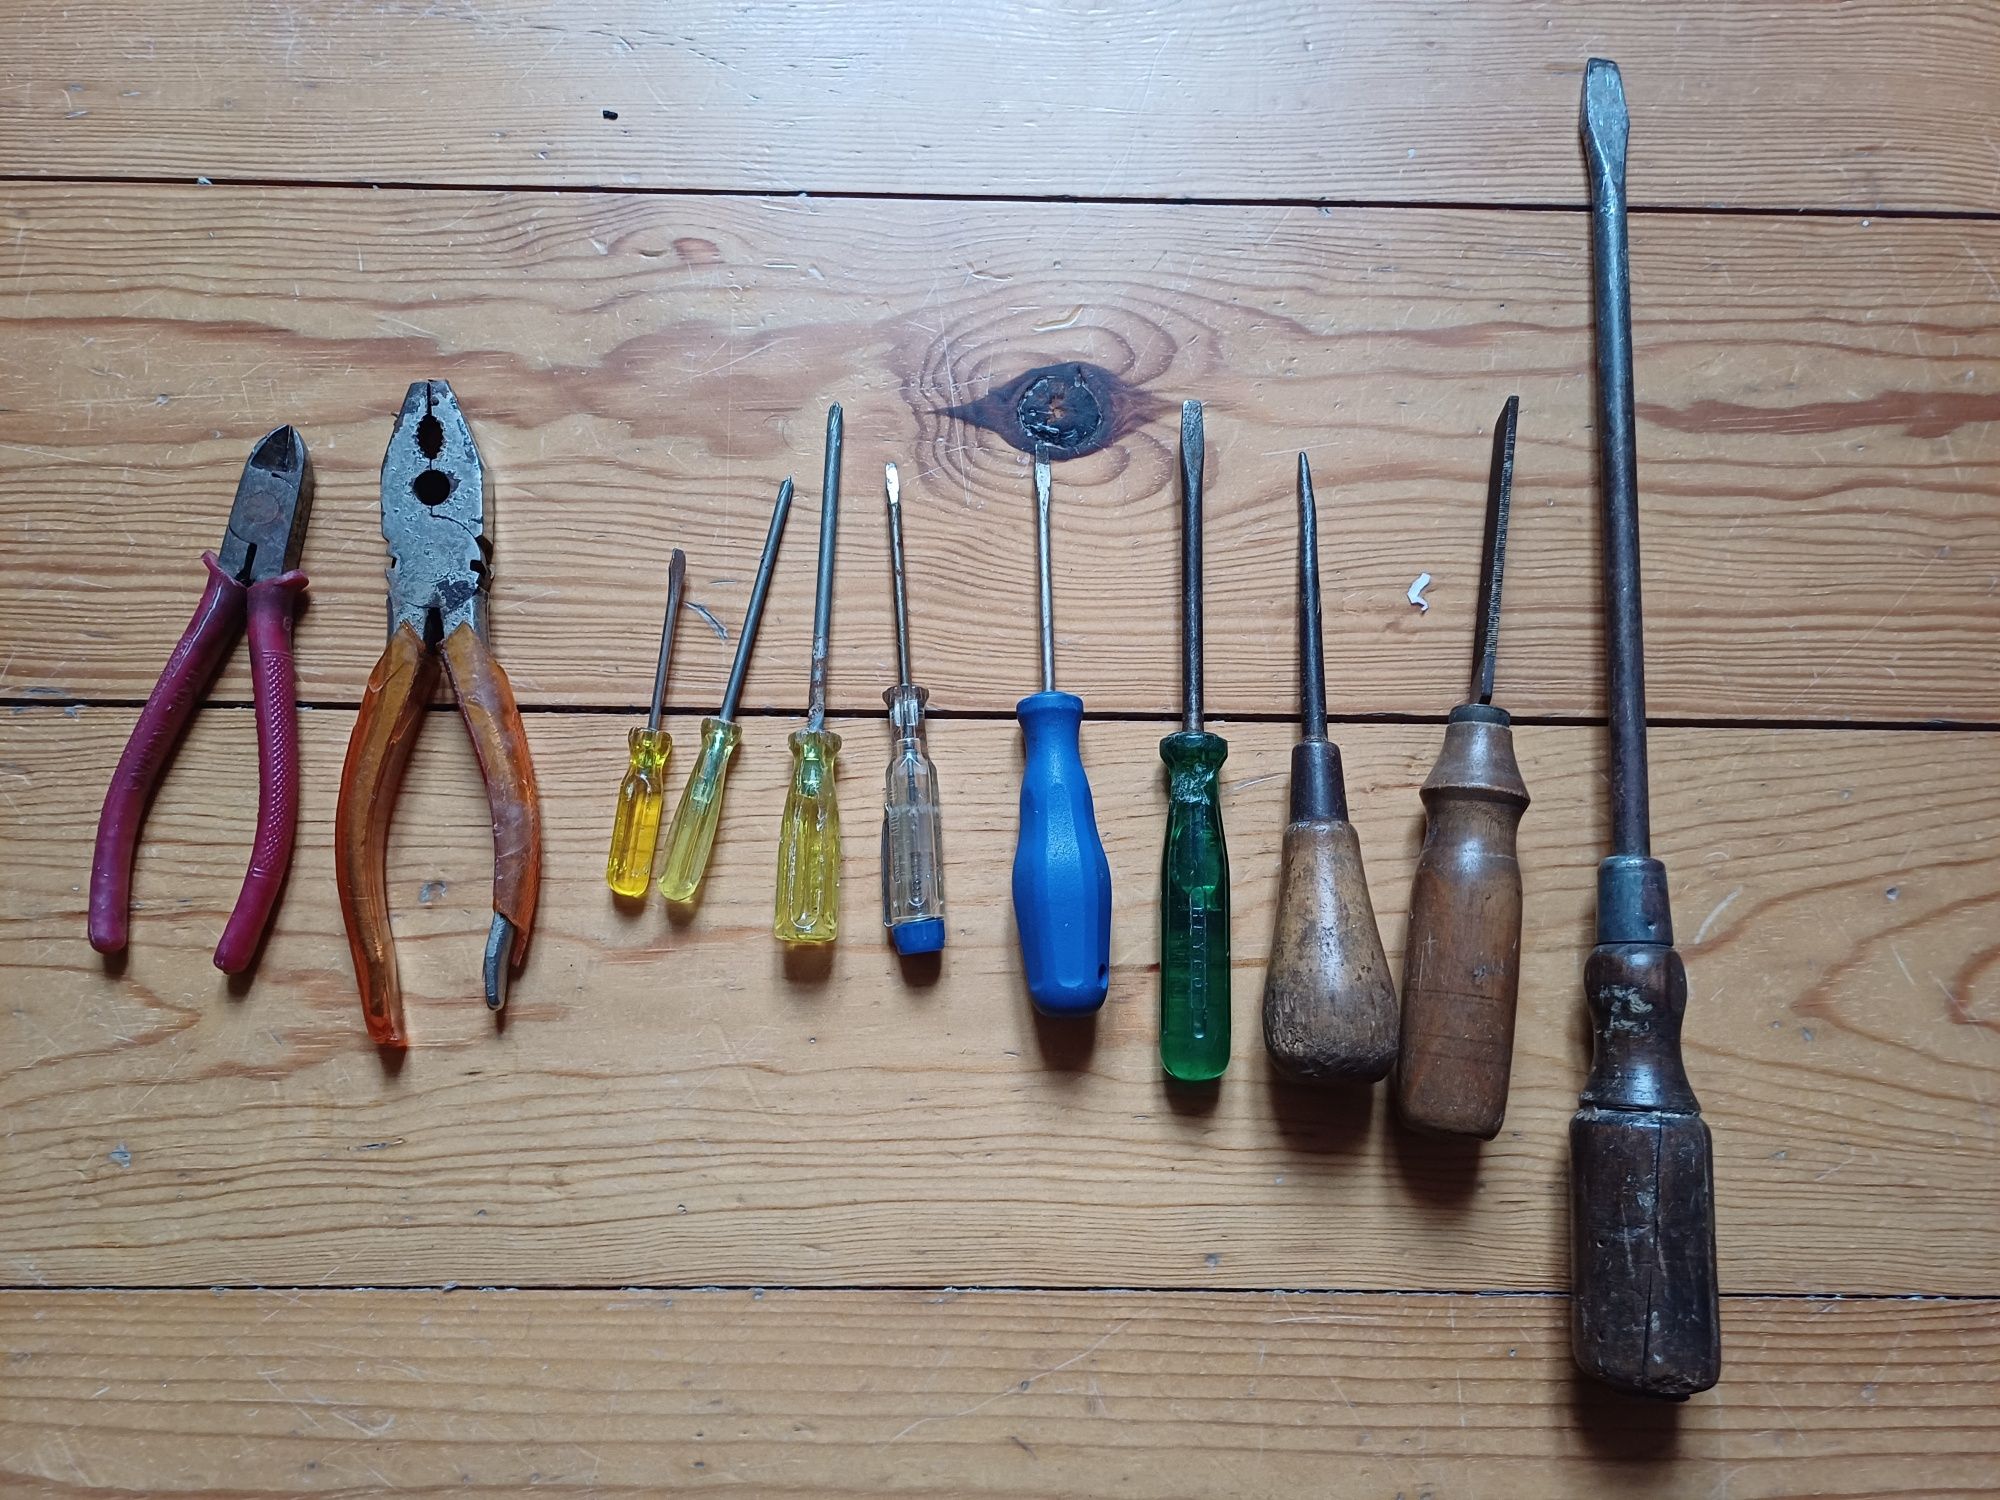 Conjunto de ferramentas funcionais: chaves de fendas e alicates